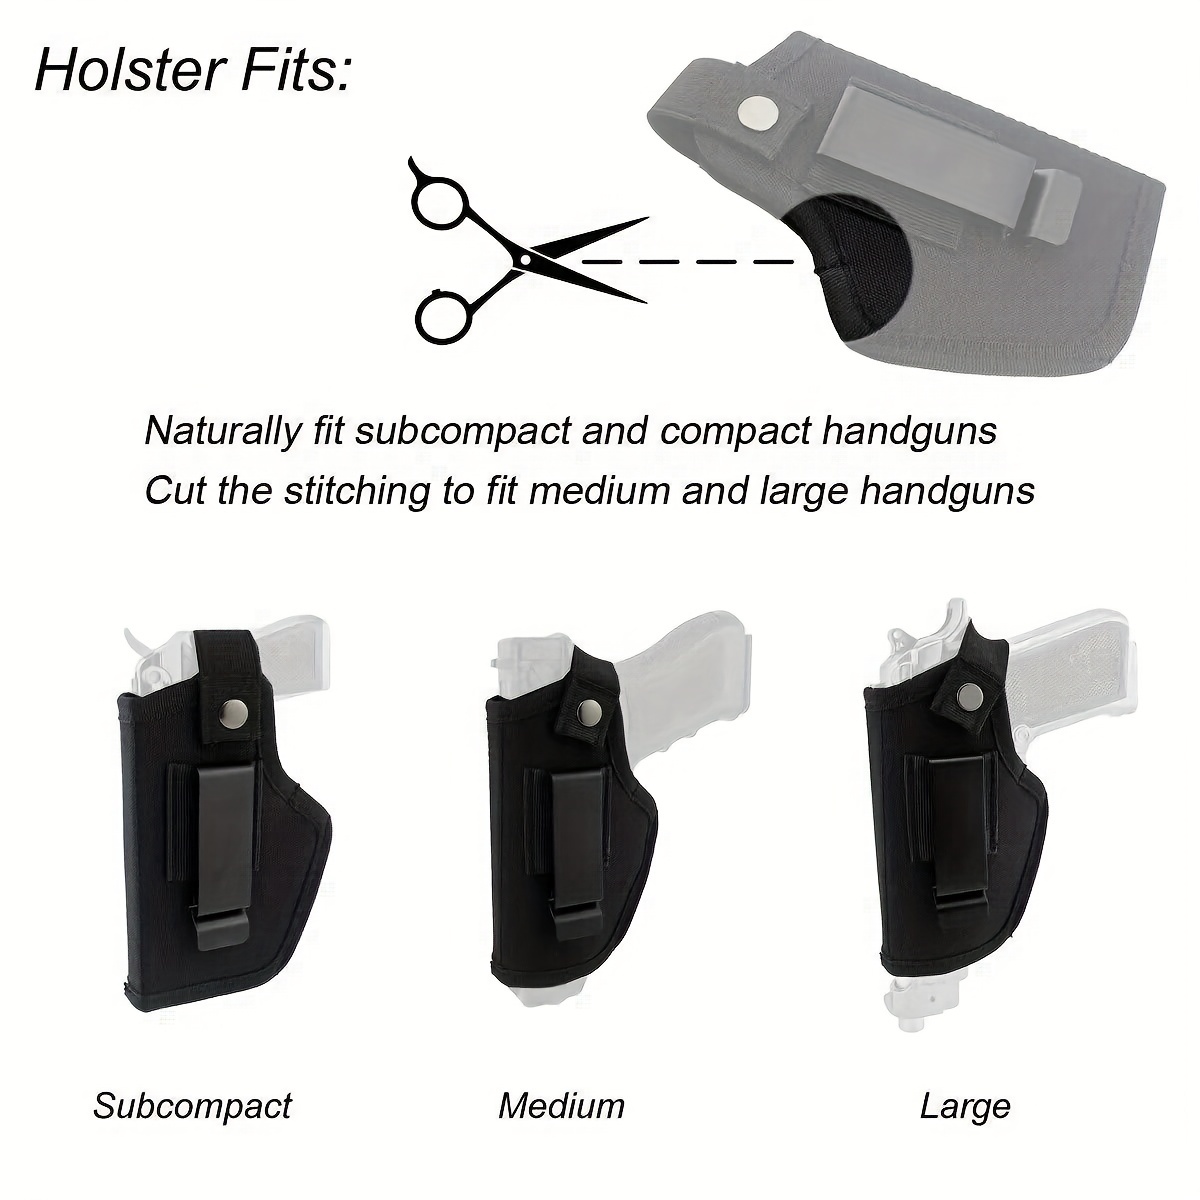  Gun Holsters for Pistols 9mm, Pistol Holster, Gun Holster for  Women/Men, 380 Holster Concealed Carry, Right/Left - OWB/IWB Fits Glock  42,27,26,23 M&P Shield (Black) : Sports & Outdoors